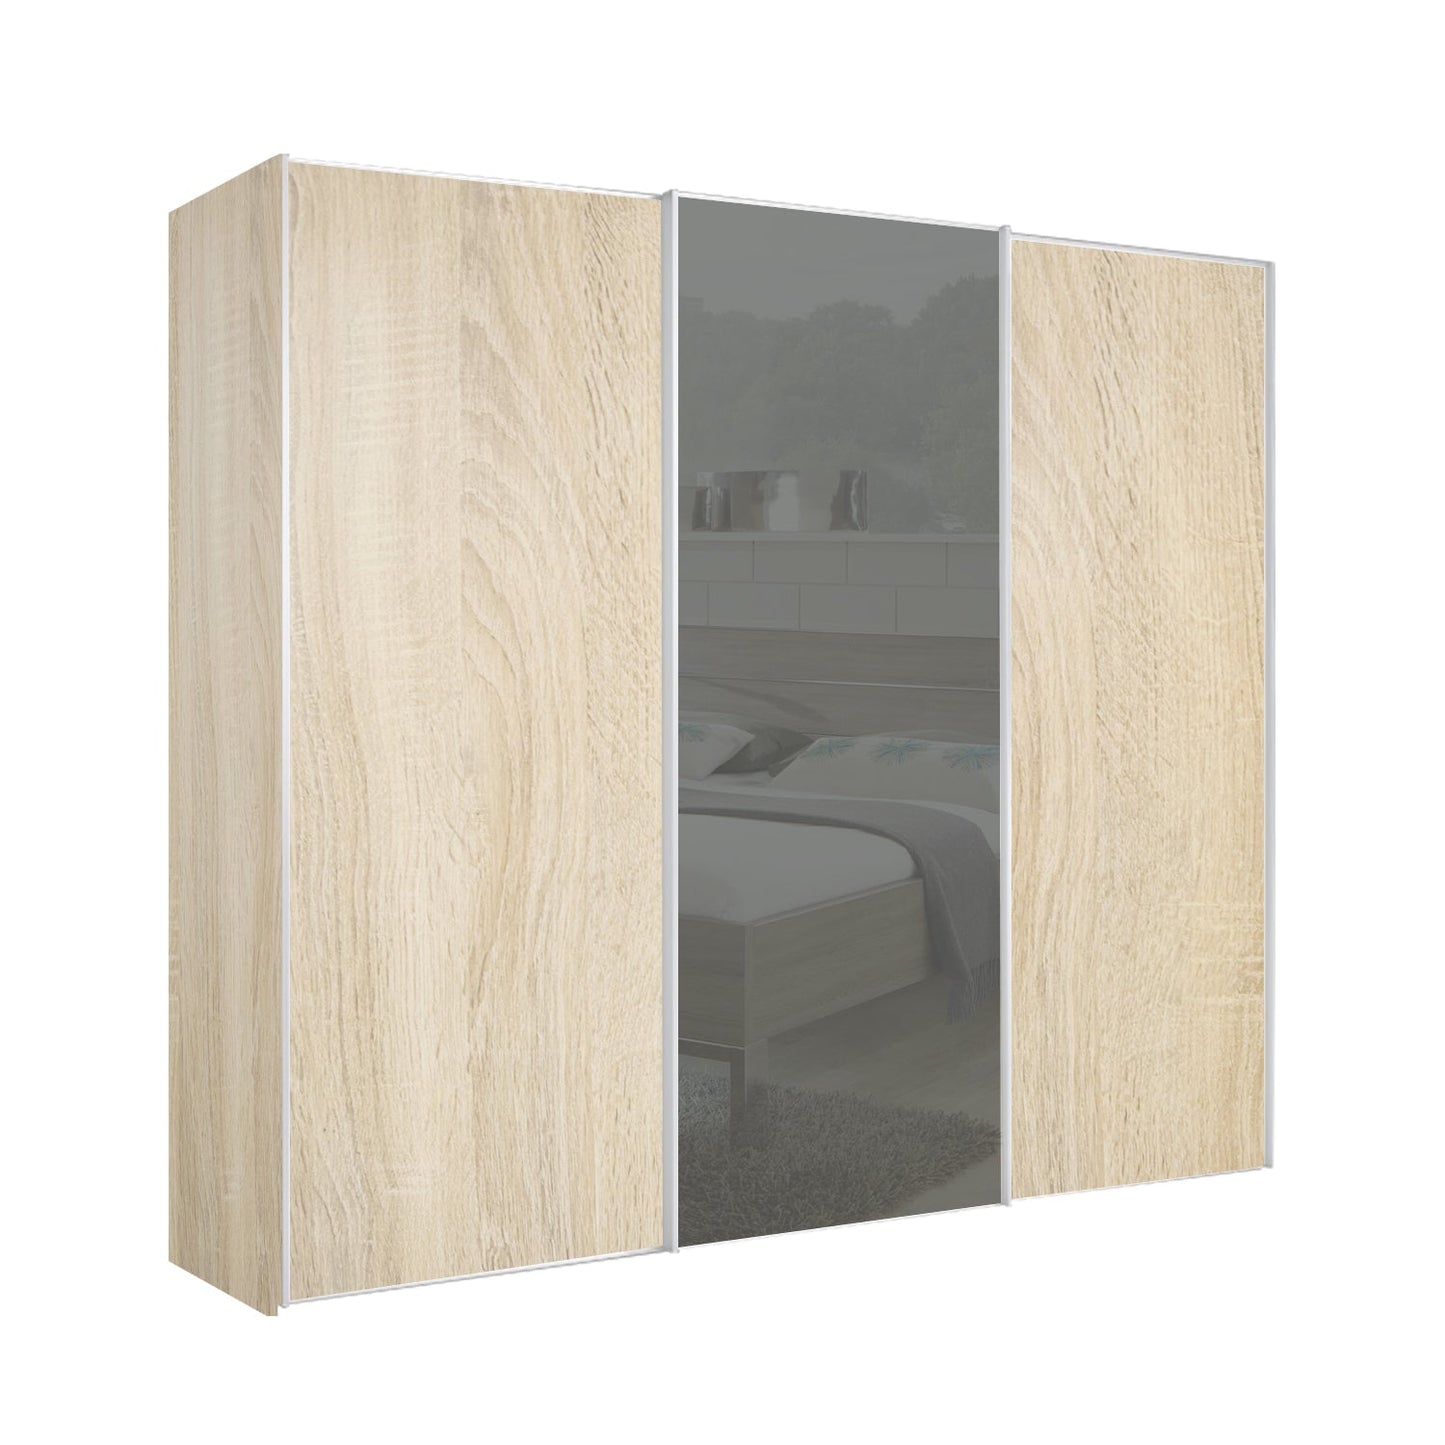 Chicago 225cm Sliding Wardrobe - Wooden Finish & All Glass Doors